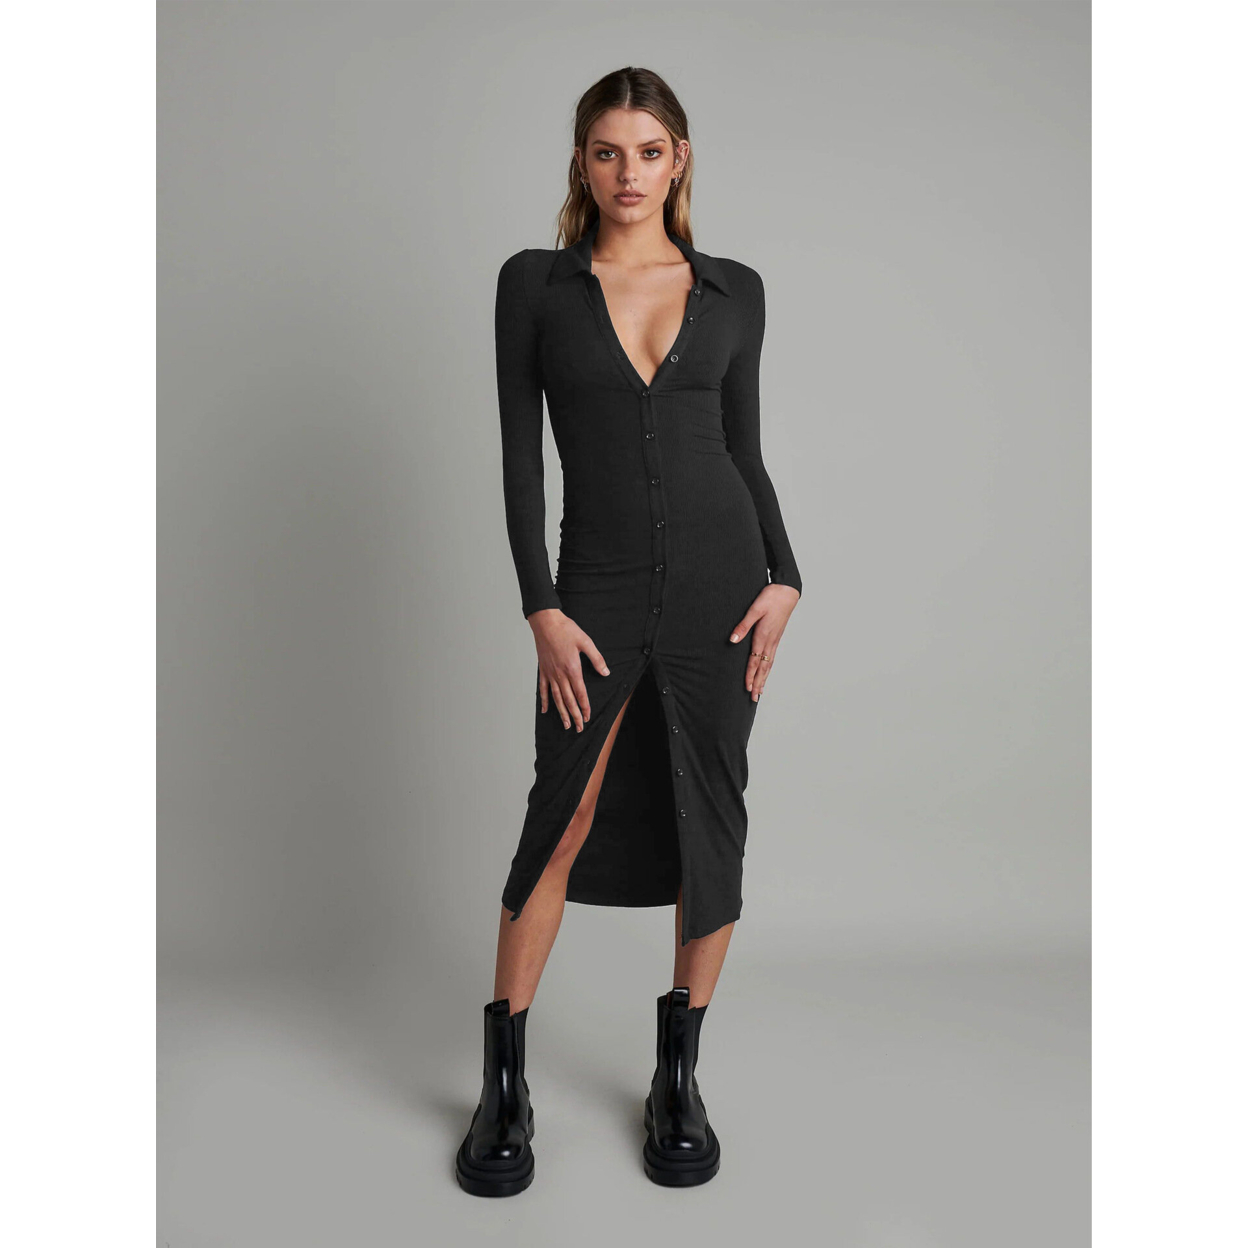 Sexy Fashion Cardigan Long Sleeve Shirt Skirt Women's Long Dress - Black, S